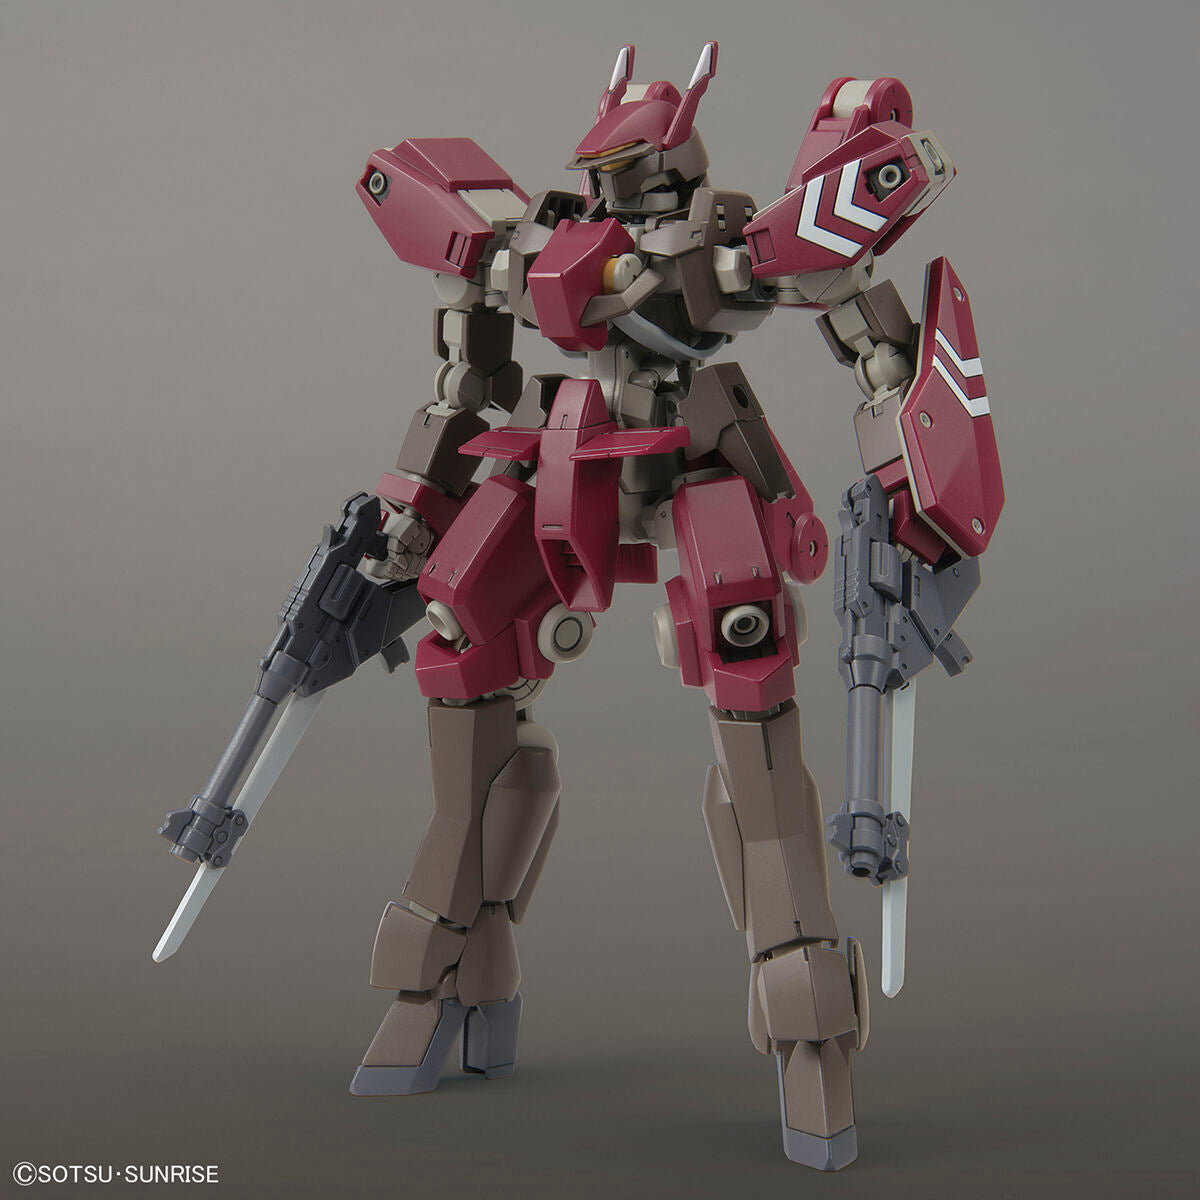 New Images of the Mobile Suit Gundam: Iron-Blooded Orphans - Urdr Hunt  mobile game have emerged! 😎 #Gunplanerd #Gunpla #Gundam #Plamo… | Instagram